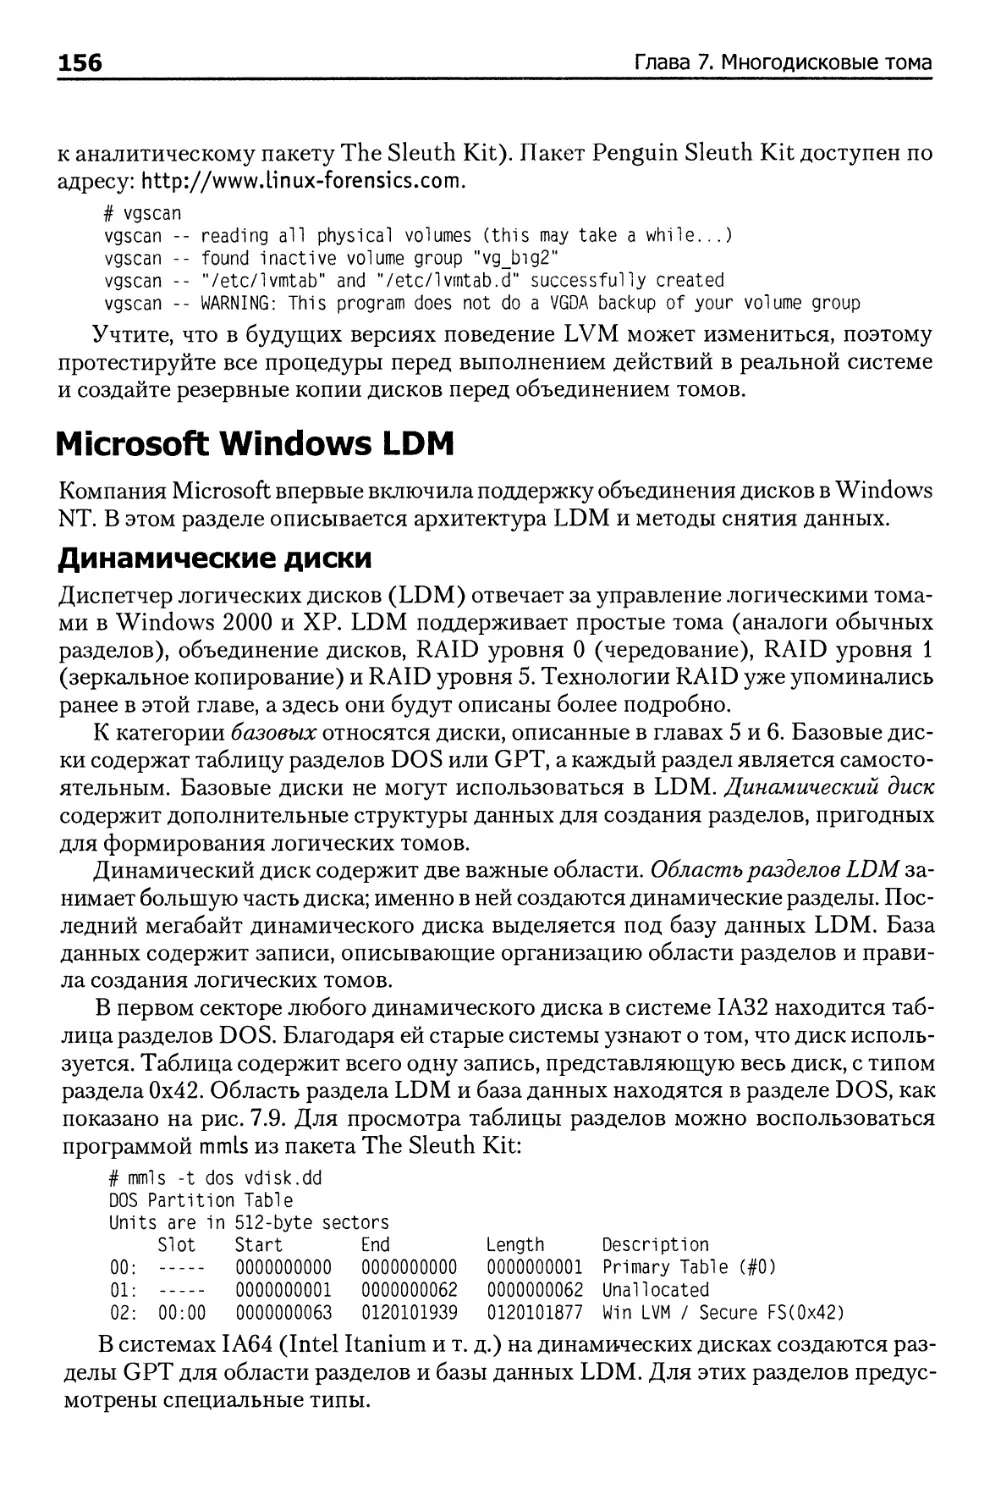 Microsoft Windows LDM